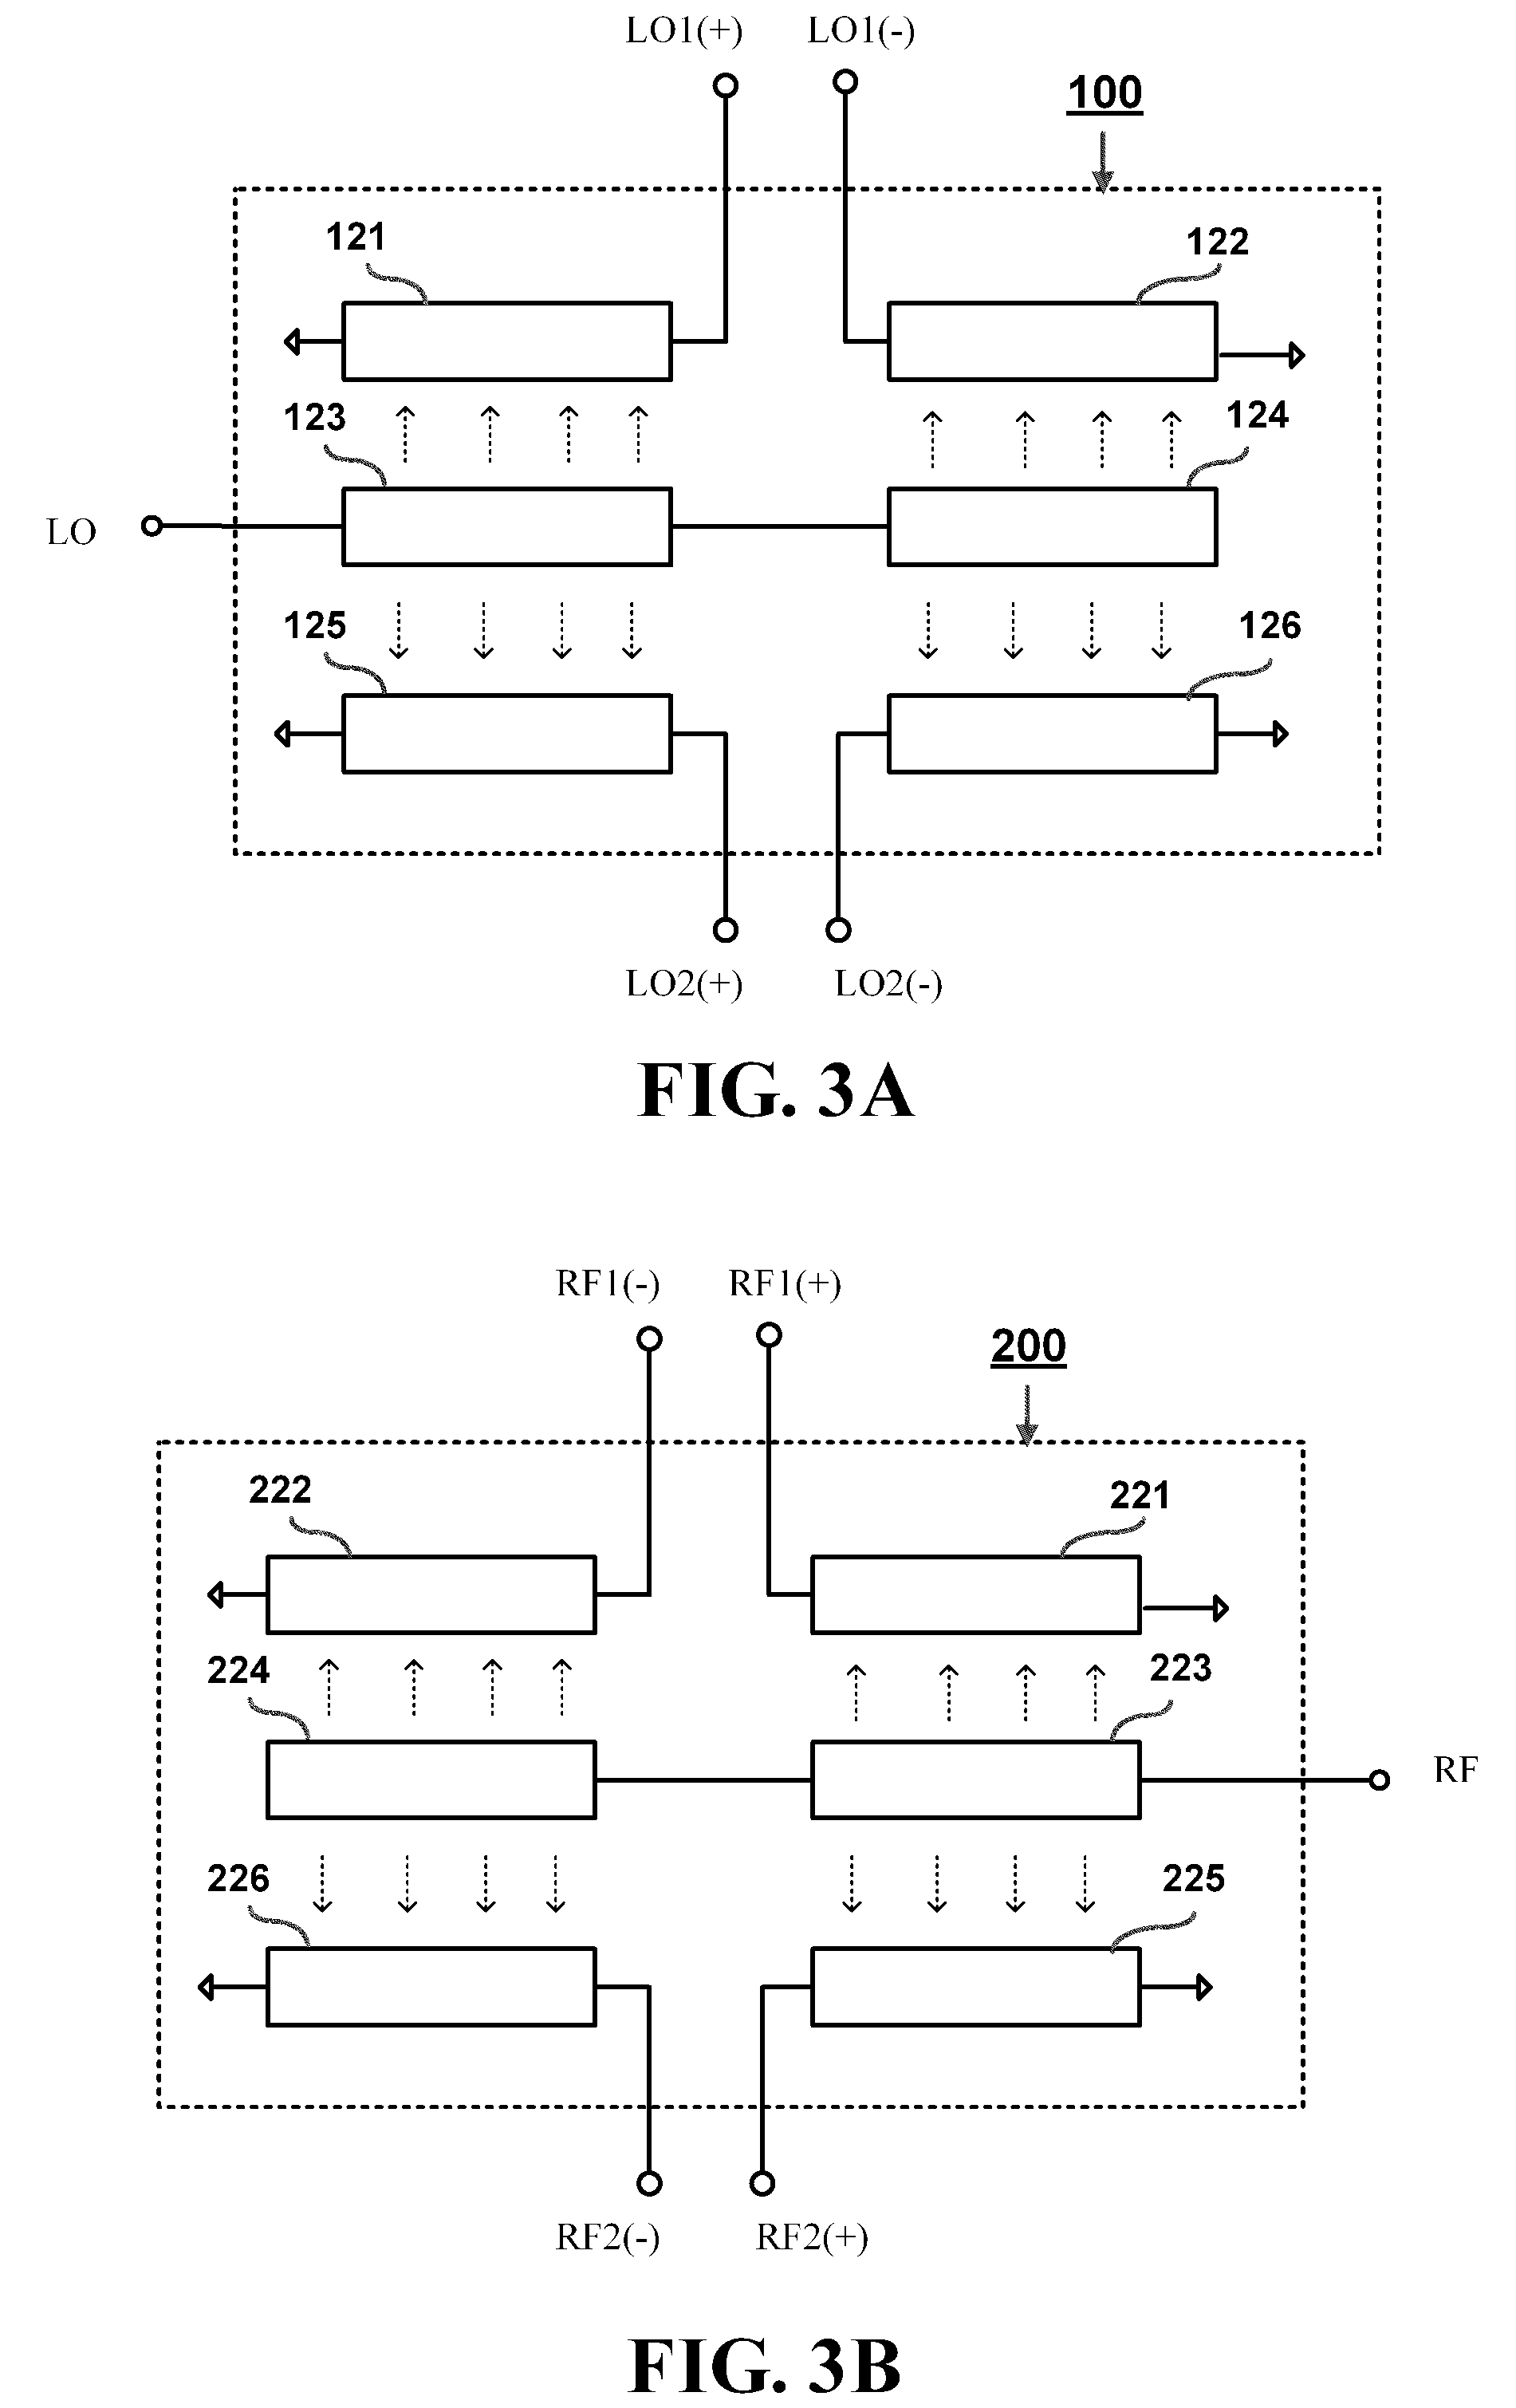 Miniaturized dual-balanced mixer circuit based on a trifilar layout architecture